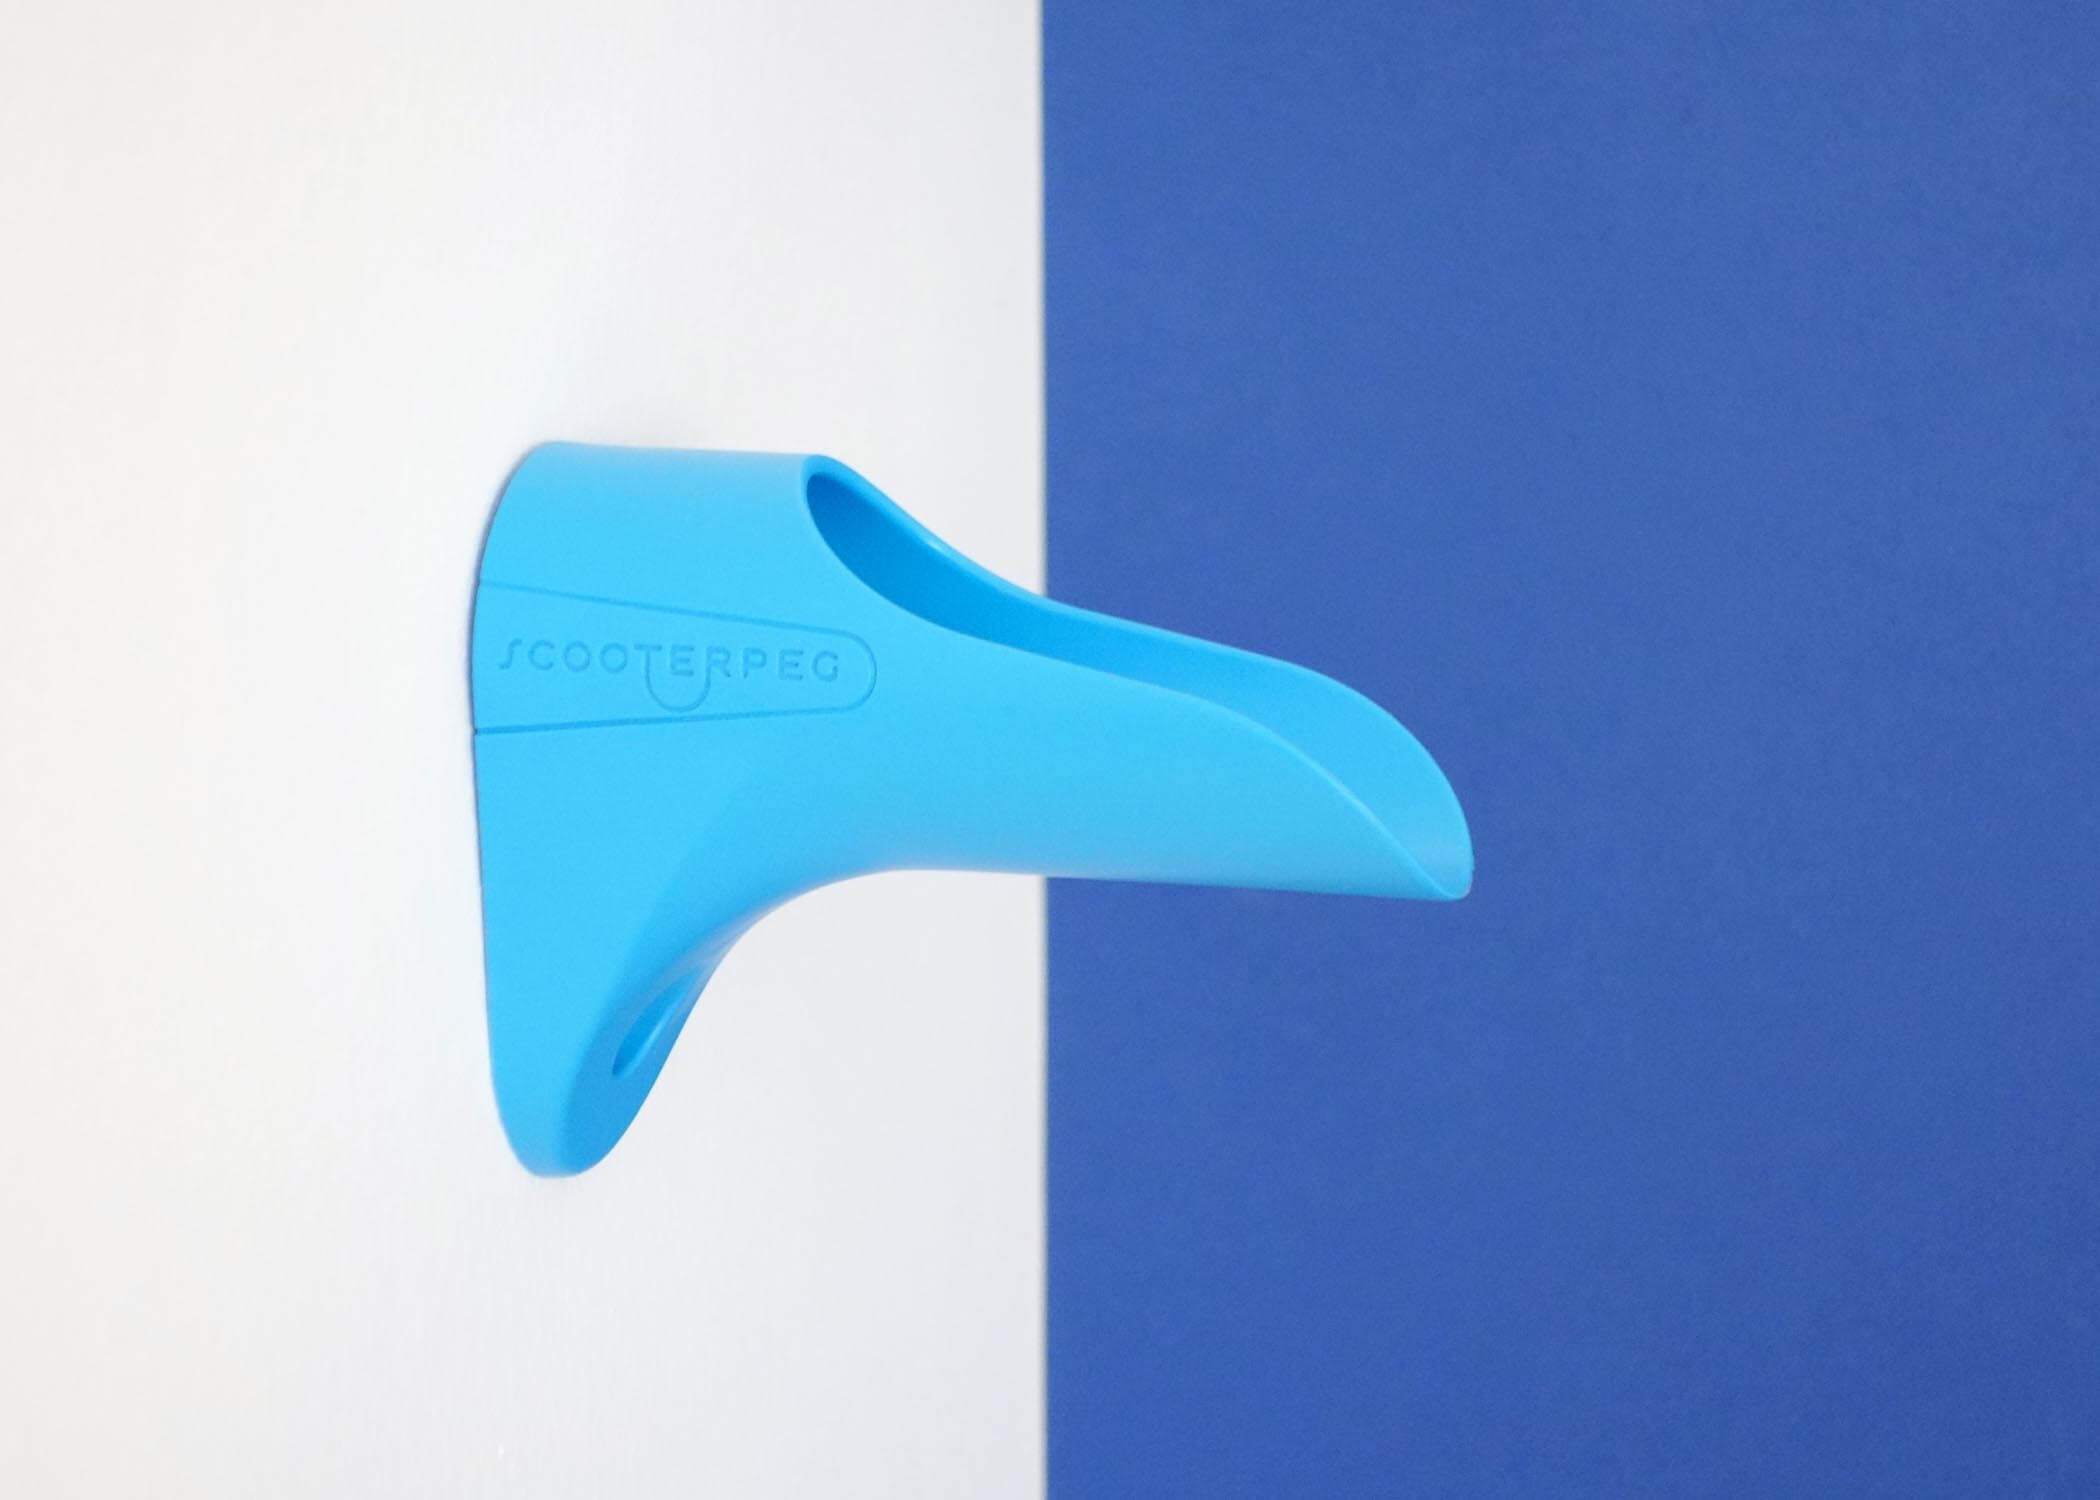 Scooterpeg product design